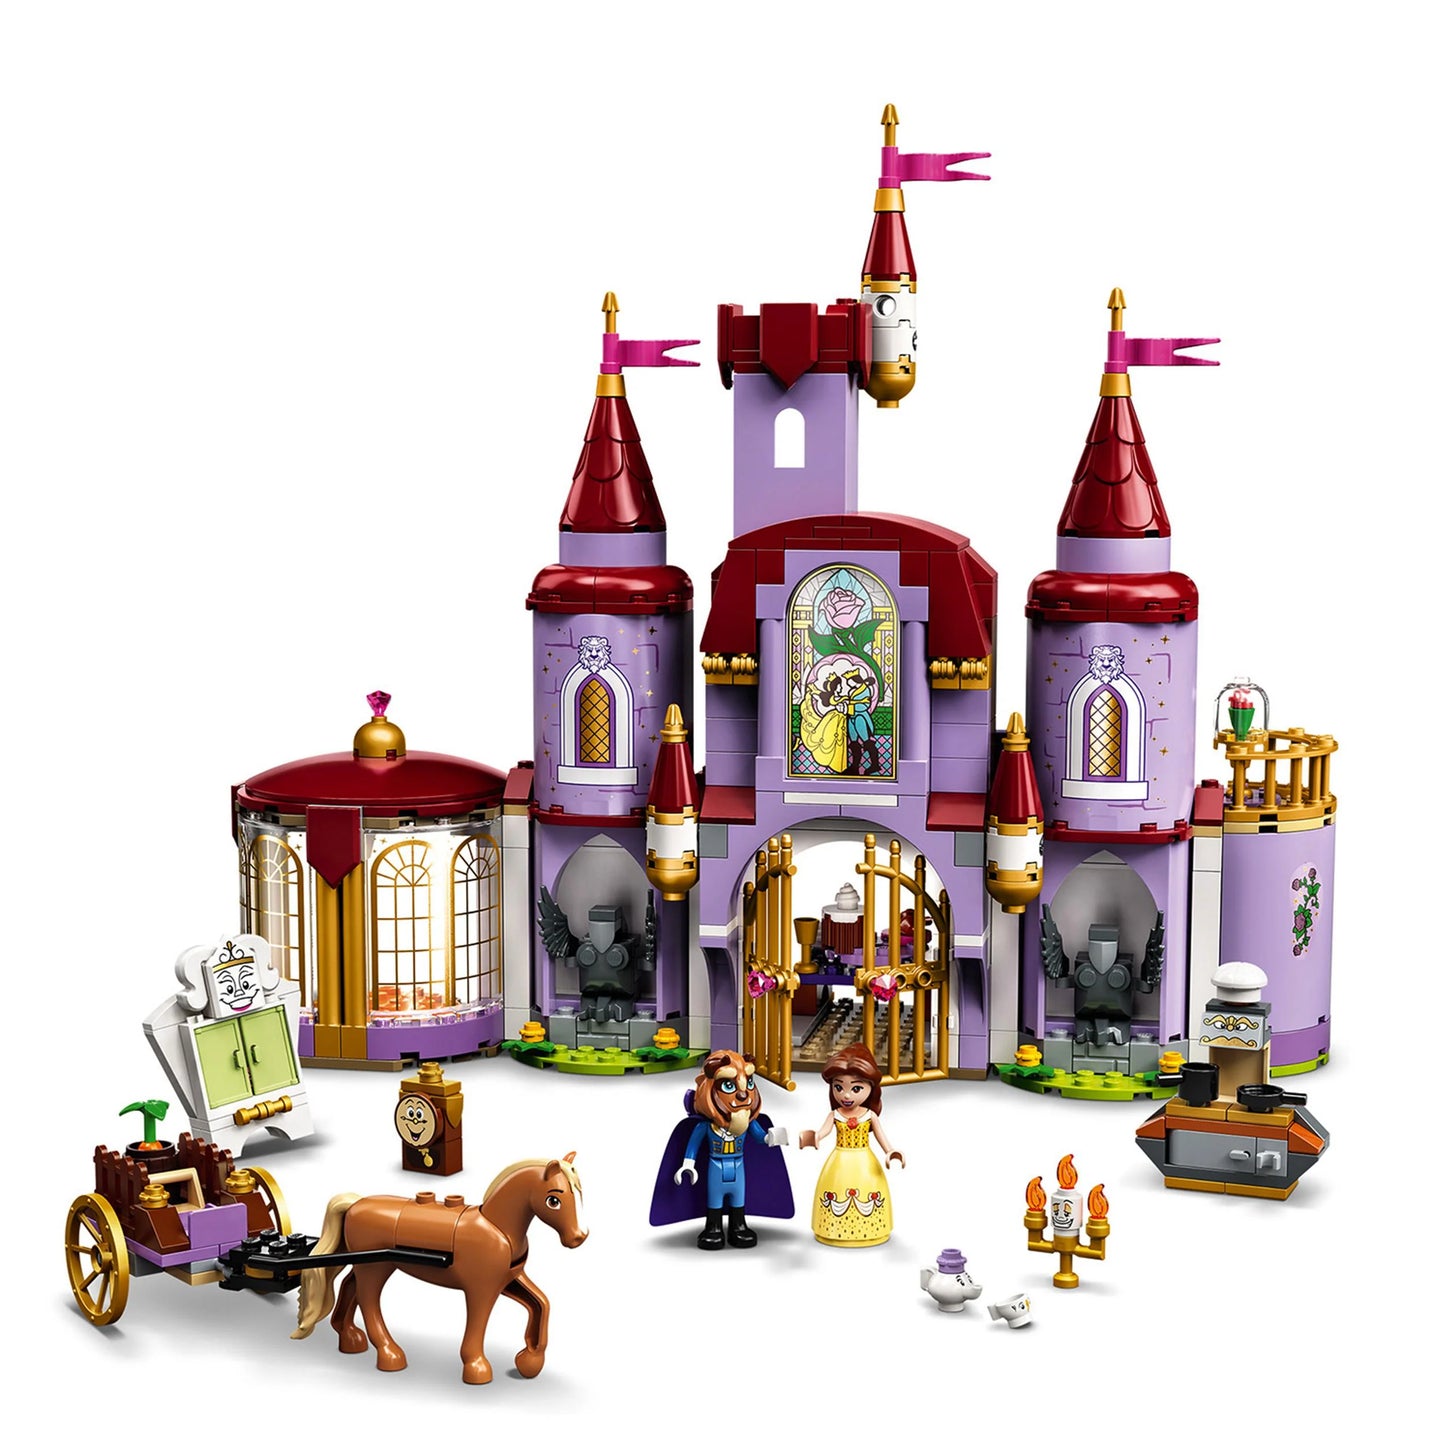 Beauty and the Beast Castle - LEGO Disney